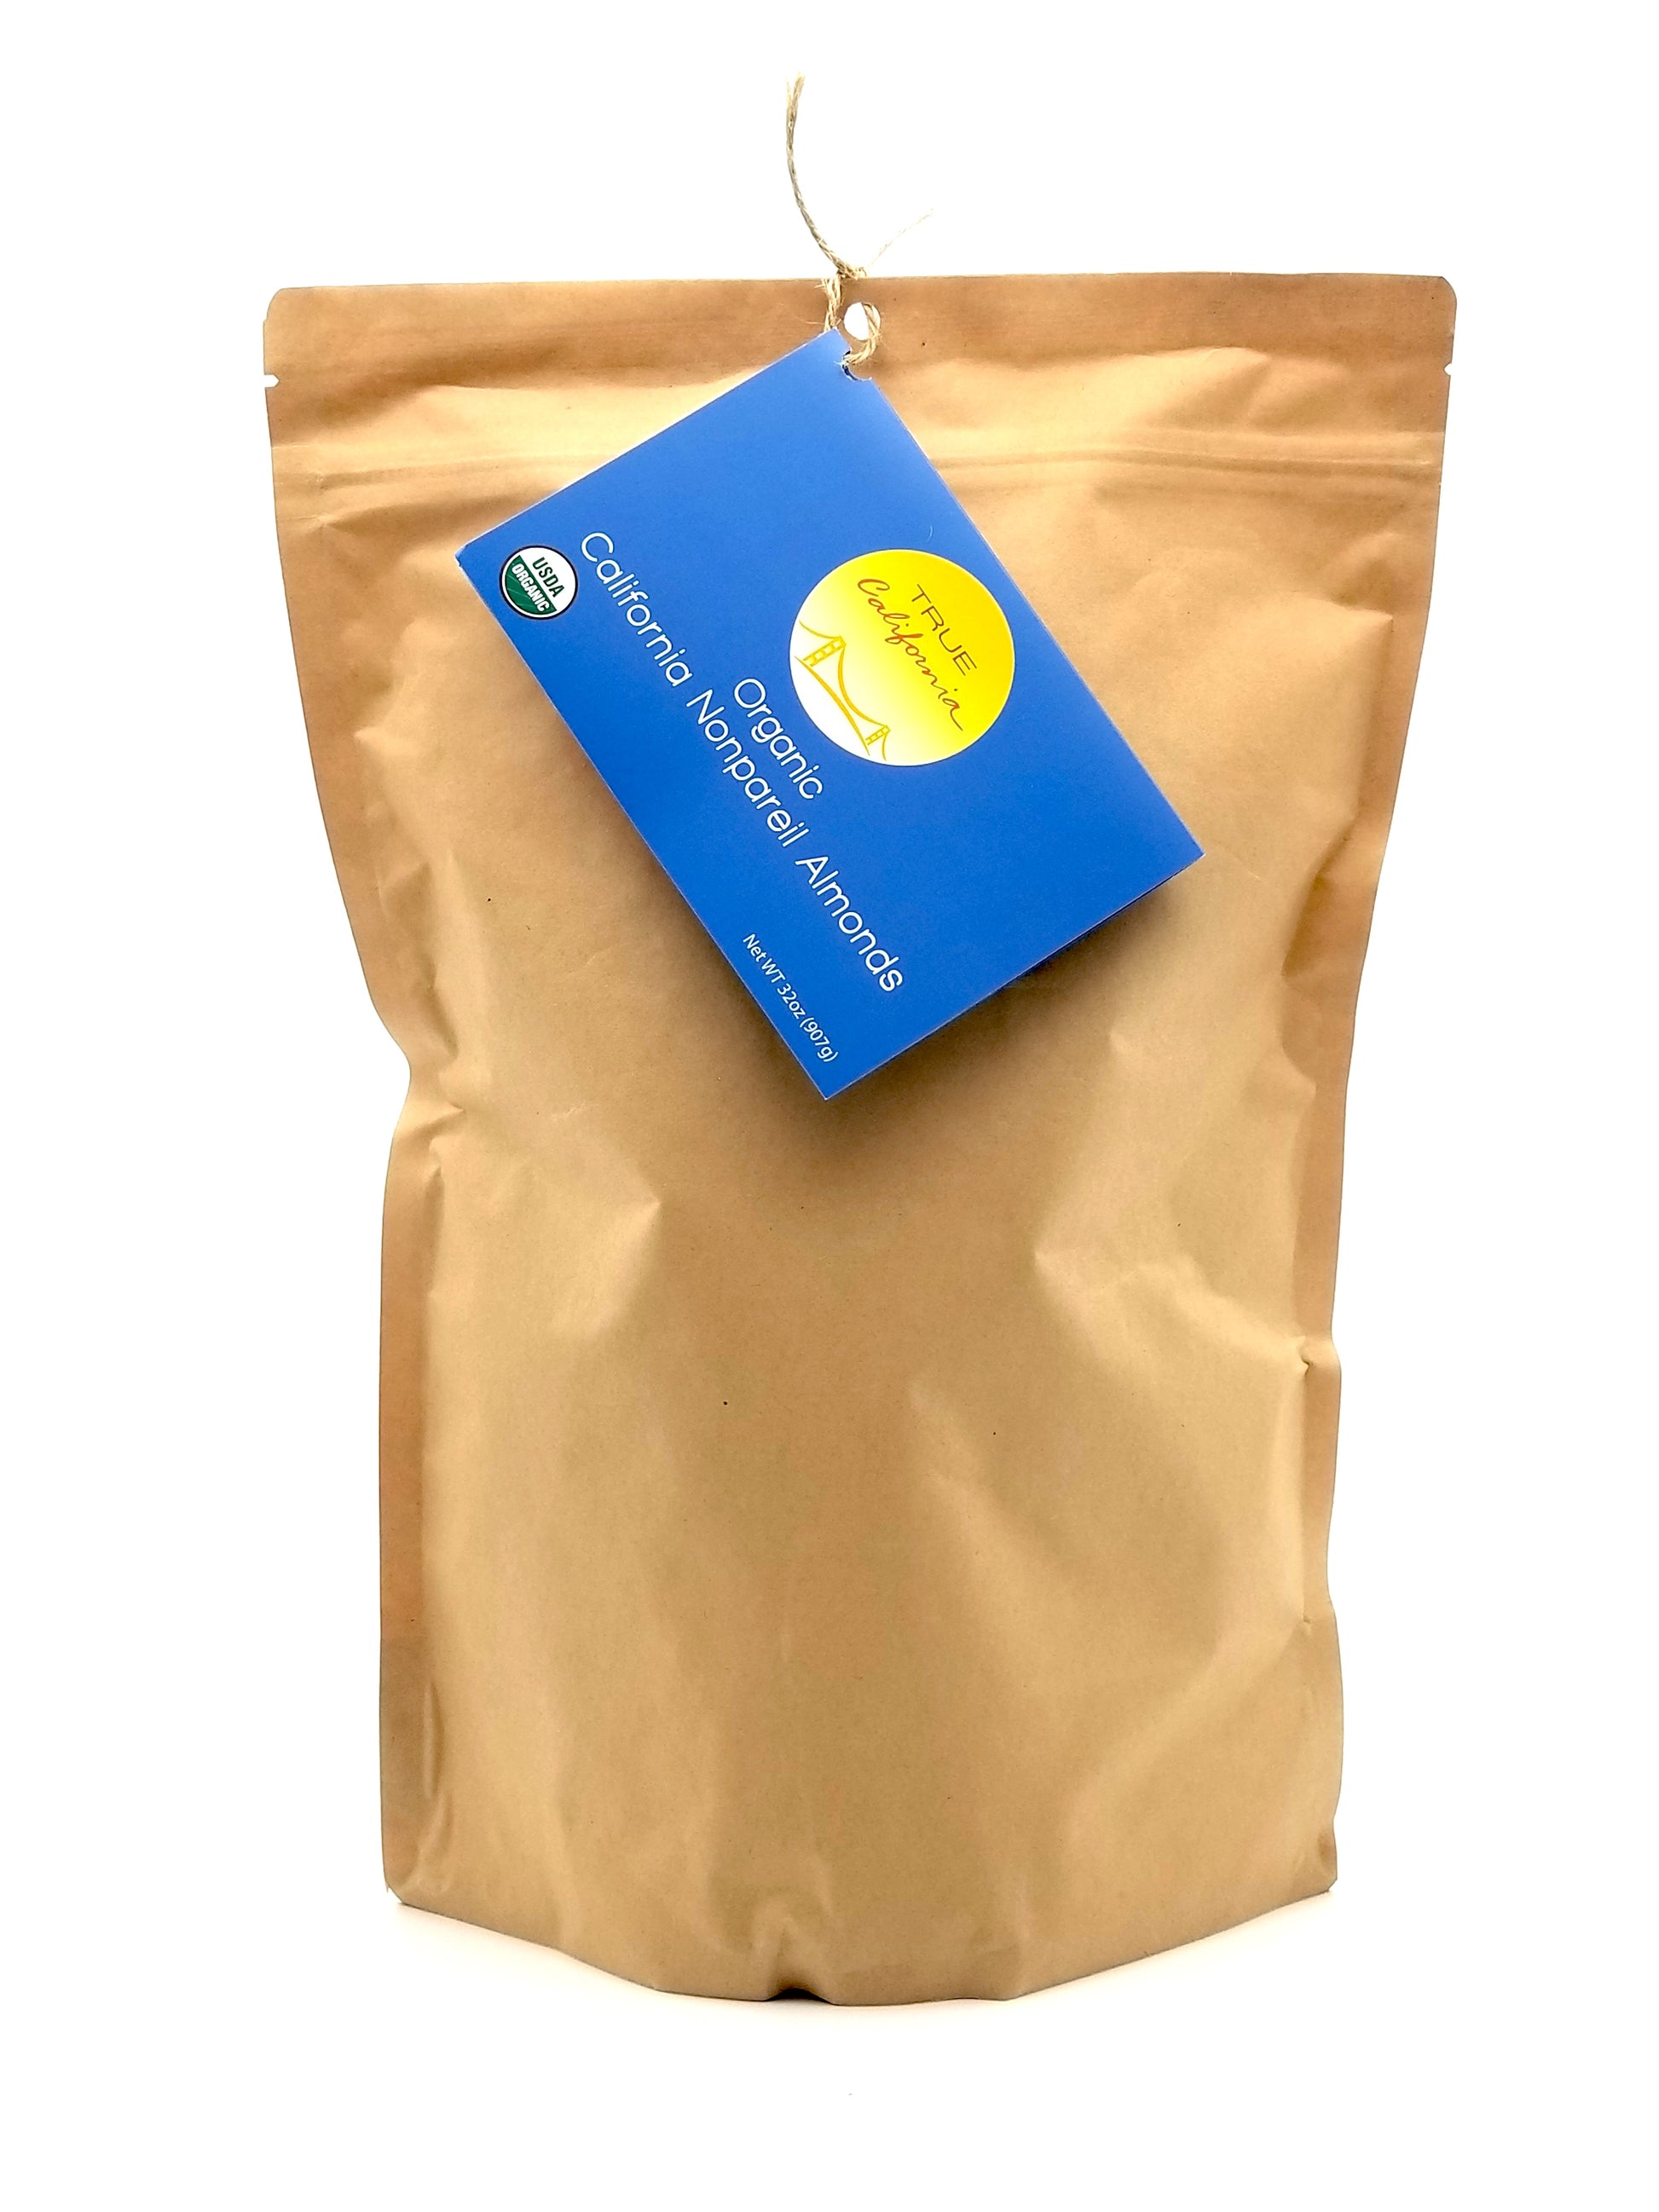 True California Organic Natural Unsalted Nonpareil Almonds in a compostable 2LB bag